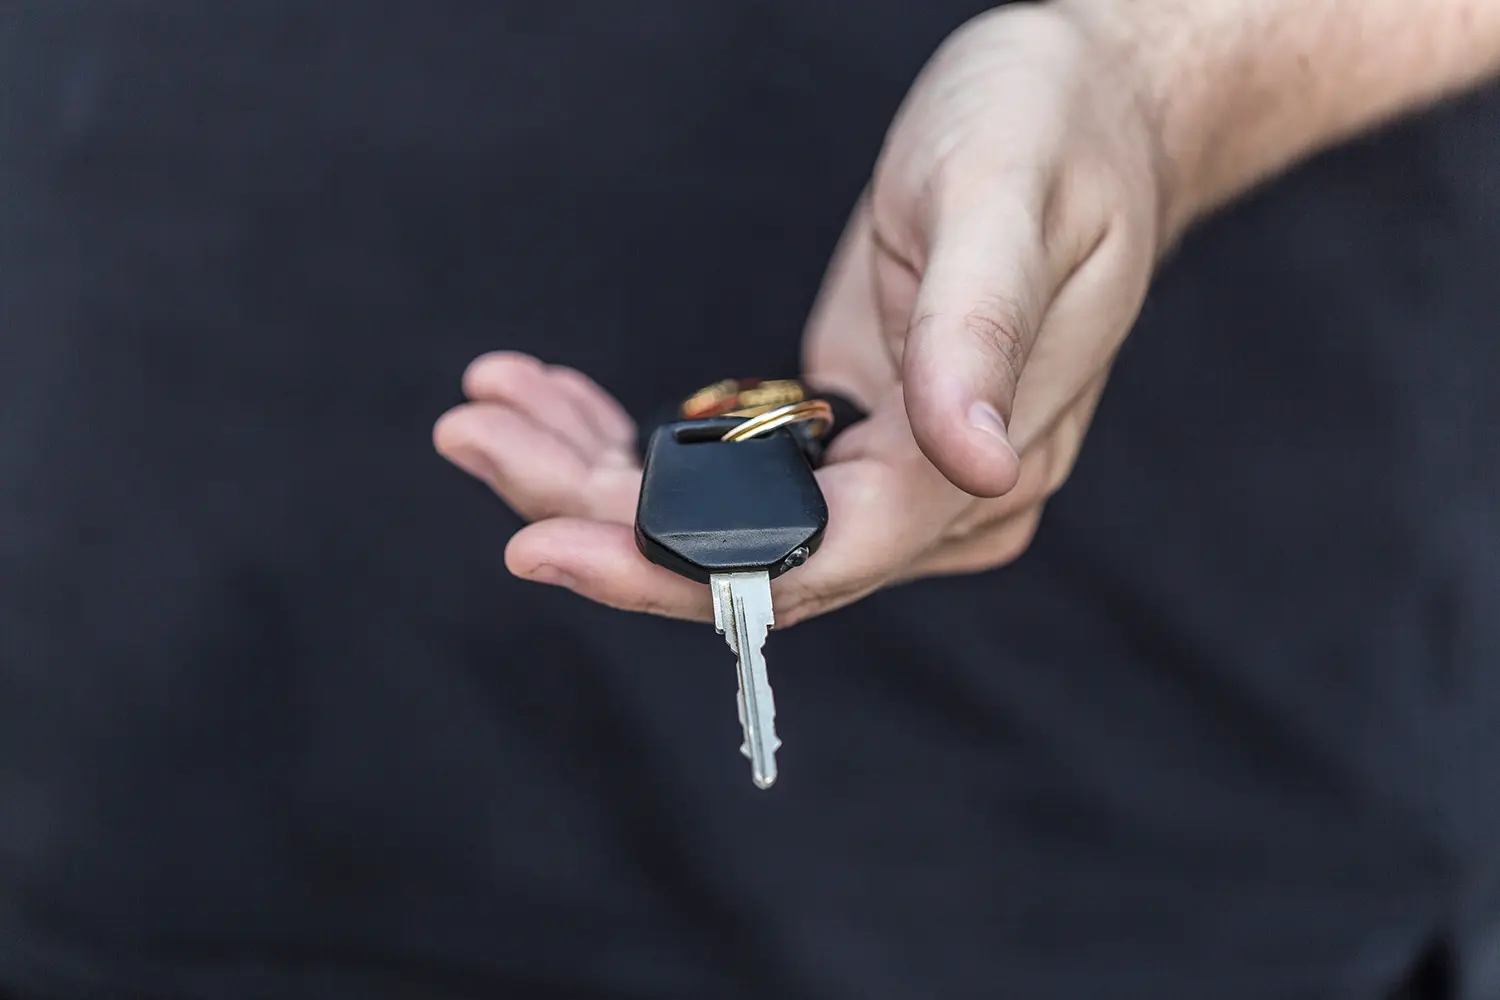 Person holding car keys